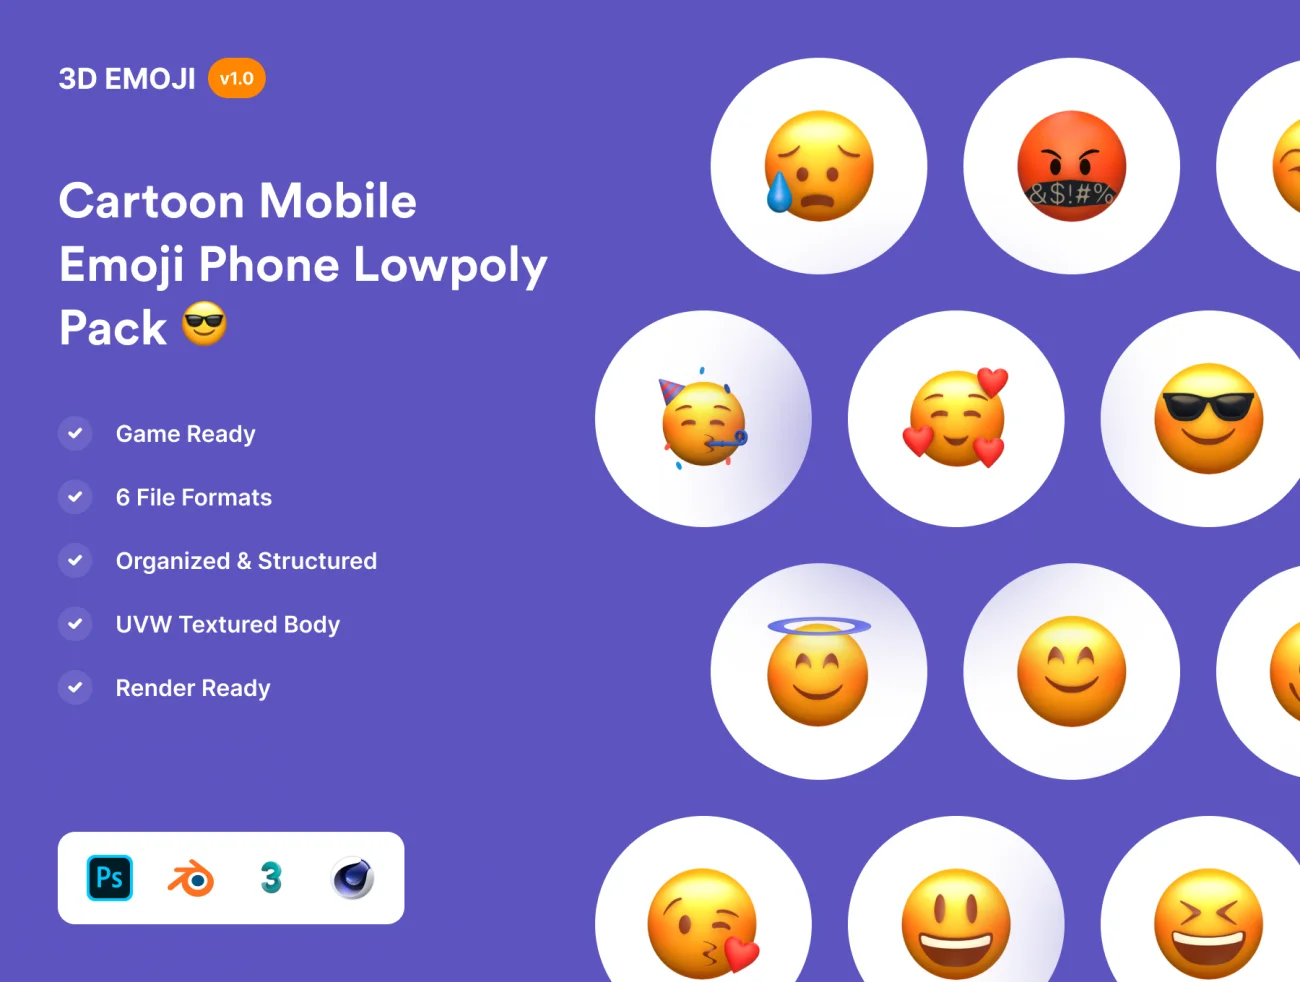 Cartoon Mobile Emoji Phone Pack 70常用3D低面建模卡通表情包合集-3D/图标-到位啦UI